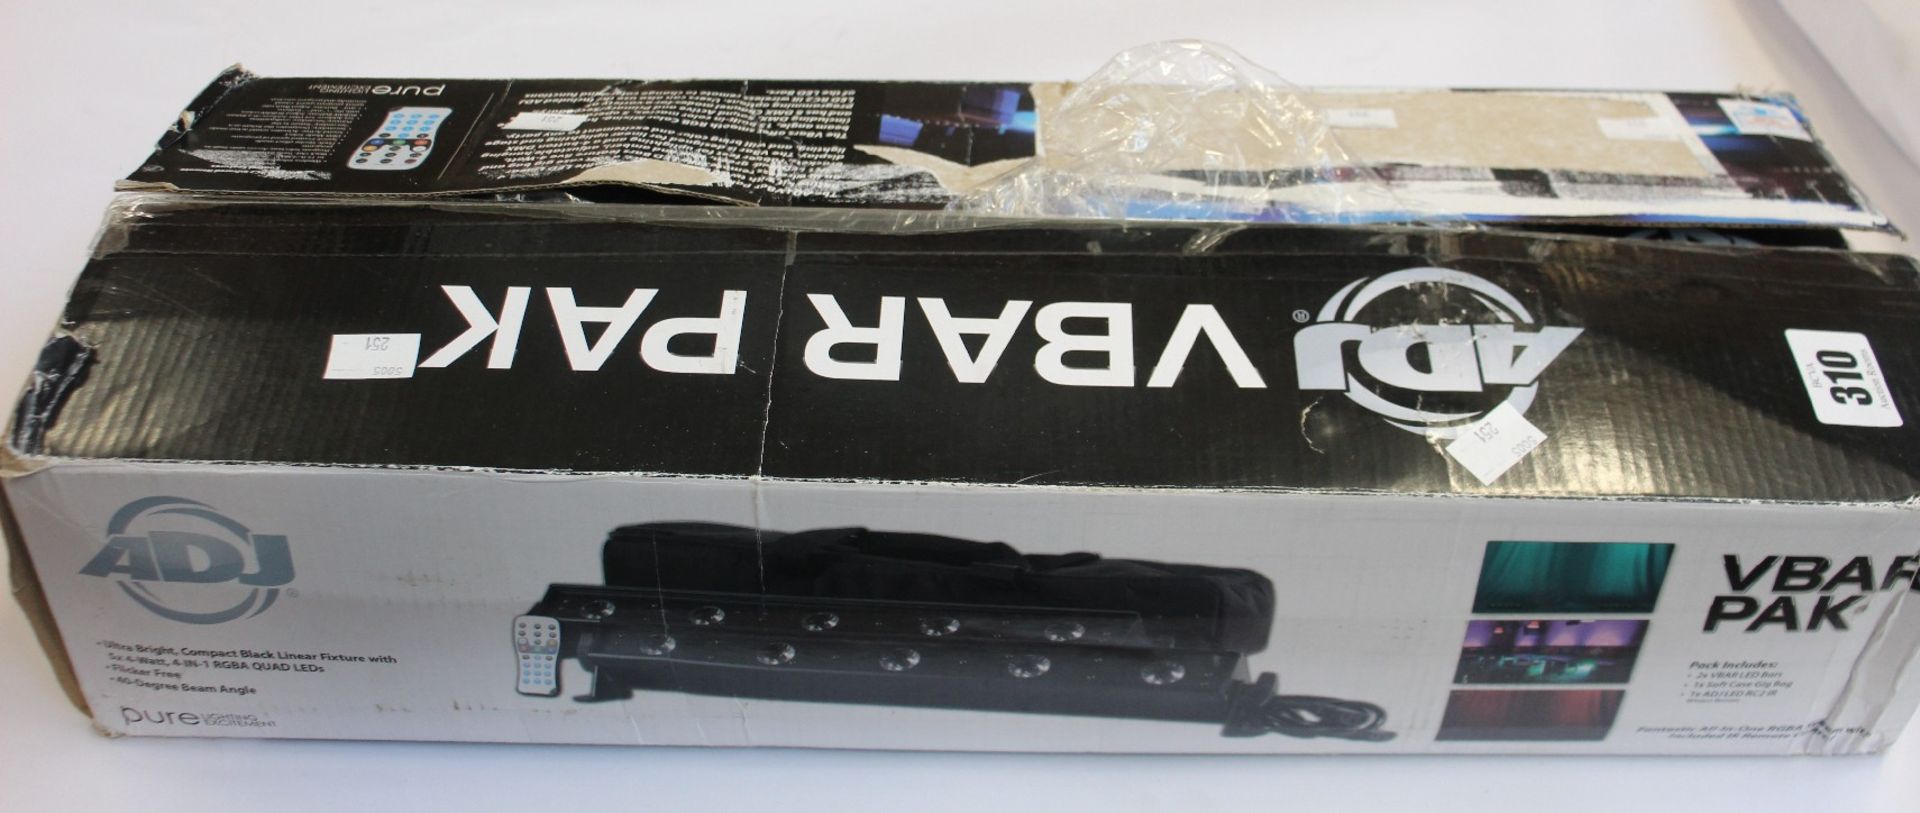 An ADJ Vbar Pak LED bars with remote control.